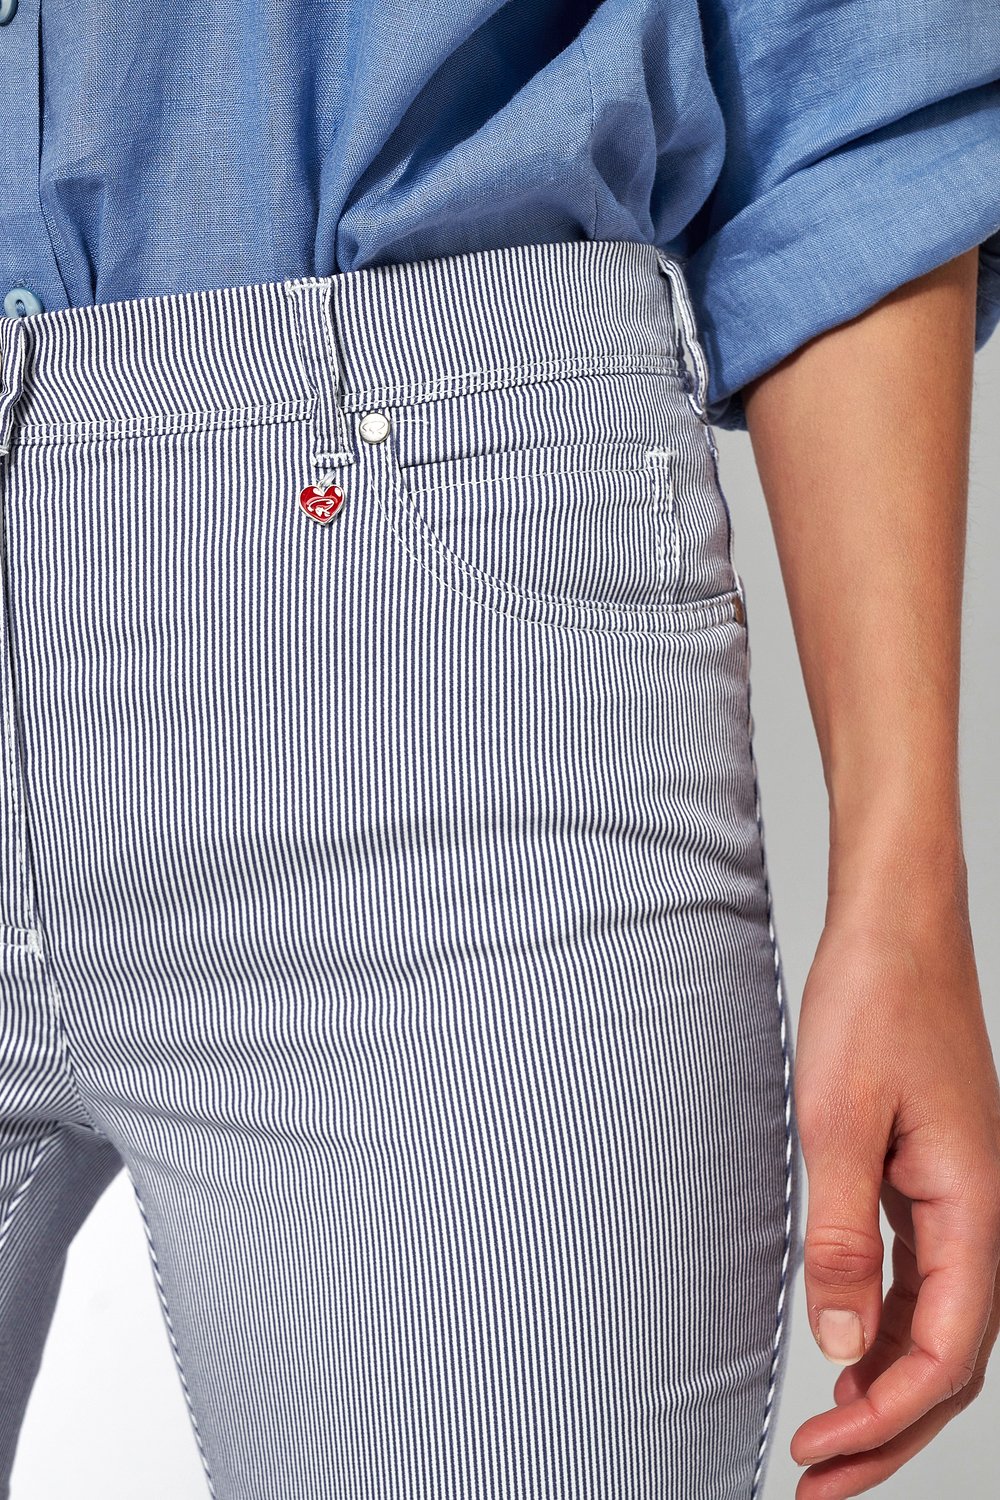 verkürzte Damen-Jeans "Meine beste Freundin 6/8" aus fein gestreiftem  Baumwoll-Elasthan